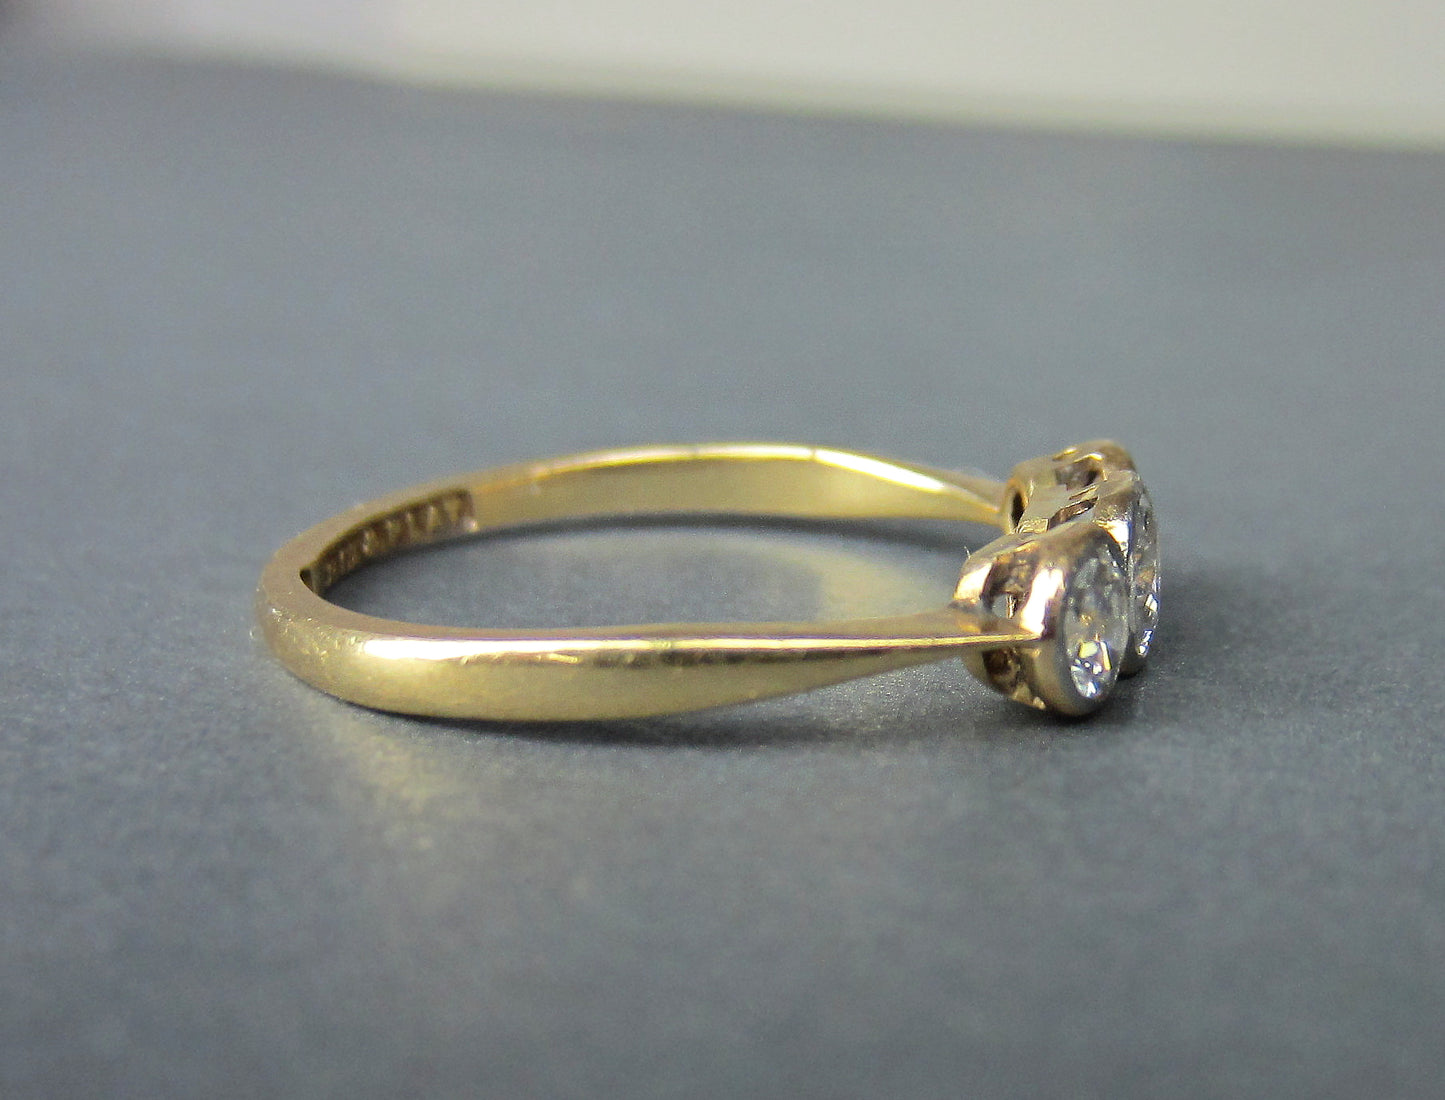 Sold-Edwardian Bezel Set Three Old European Diamond Ring Platinum/18k c. 1910